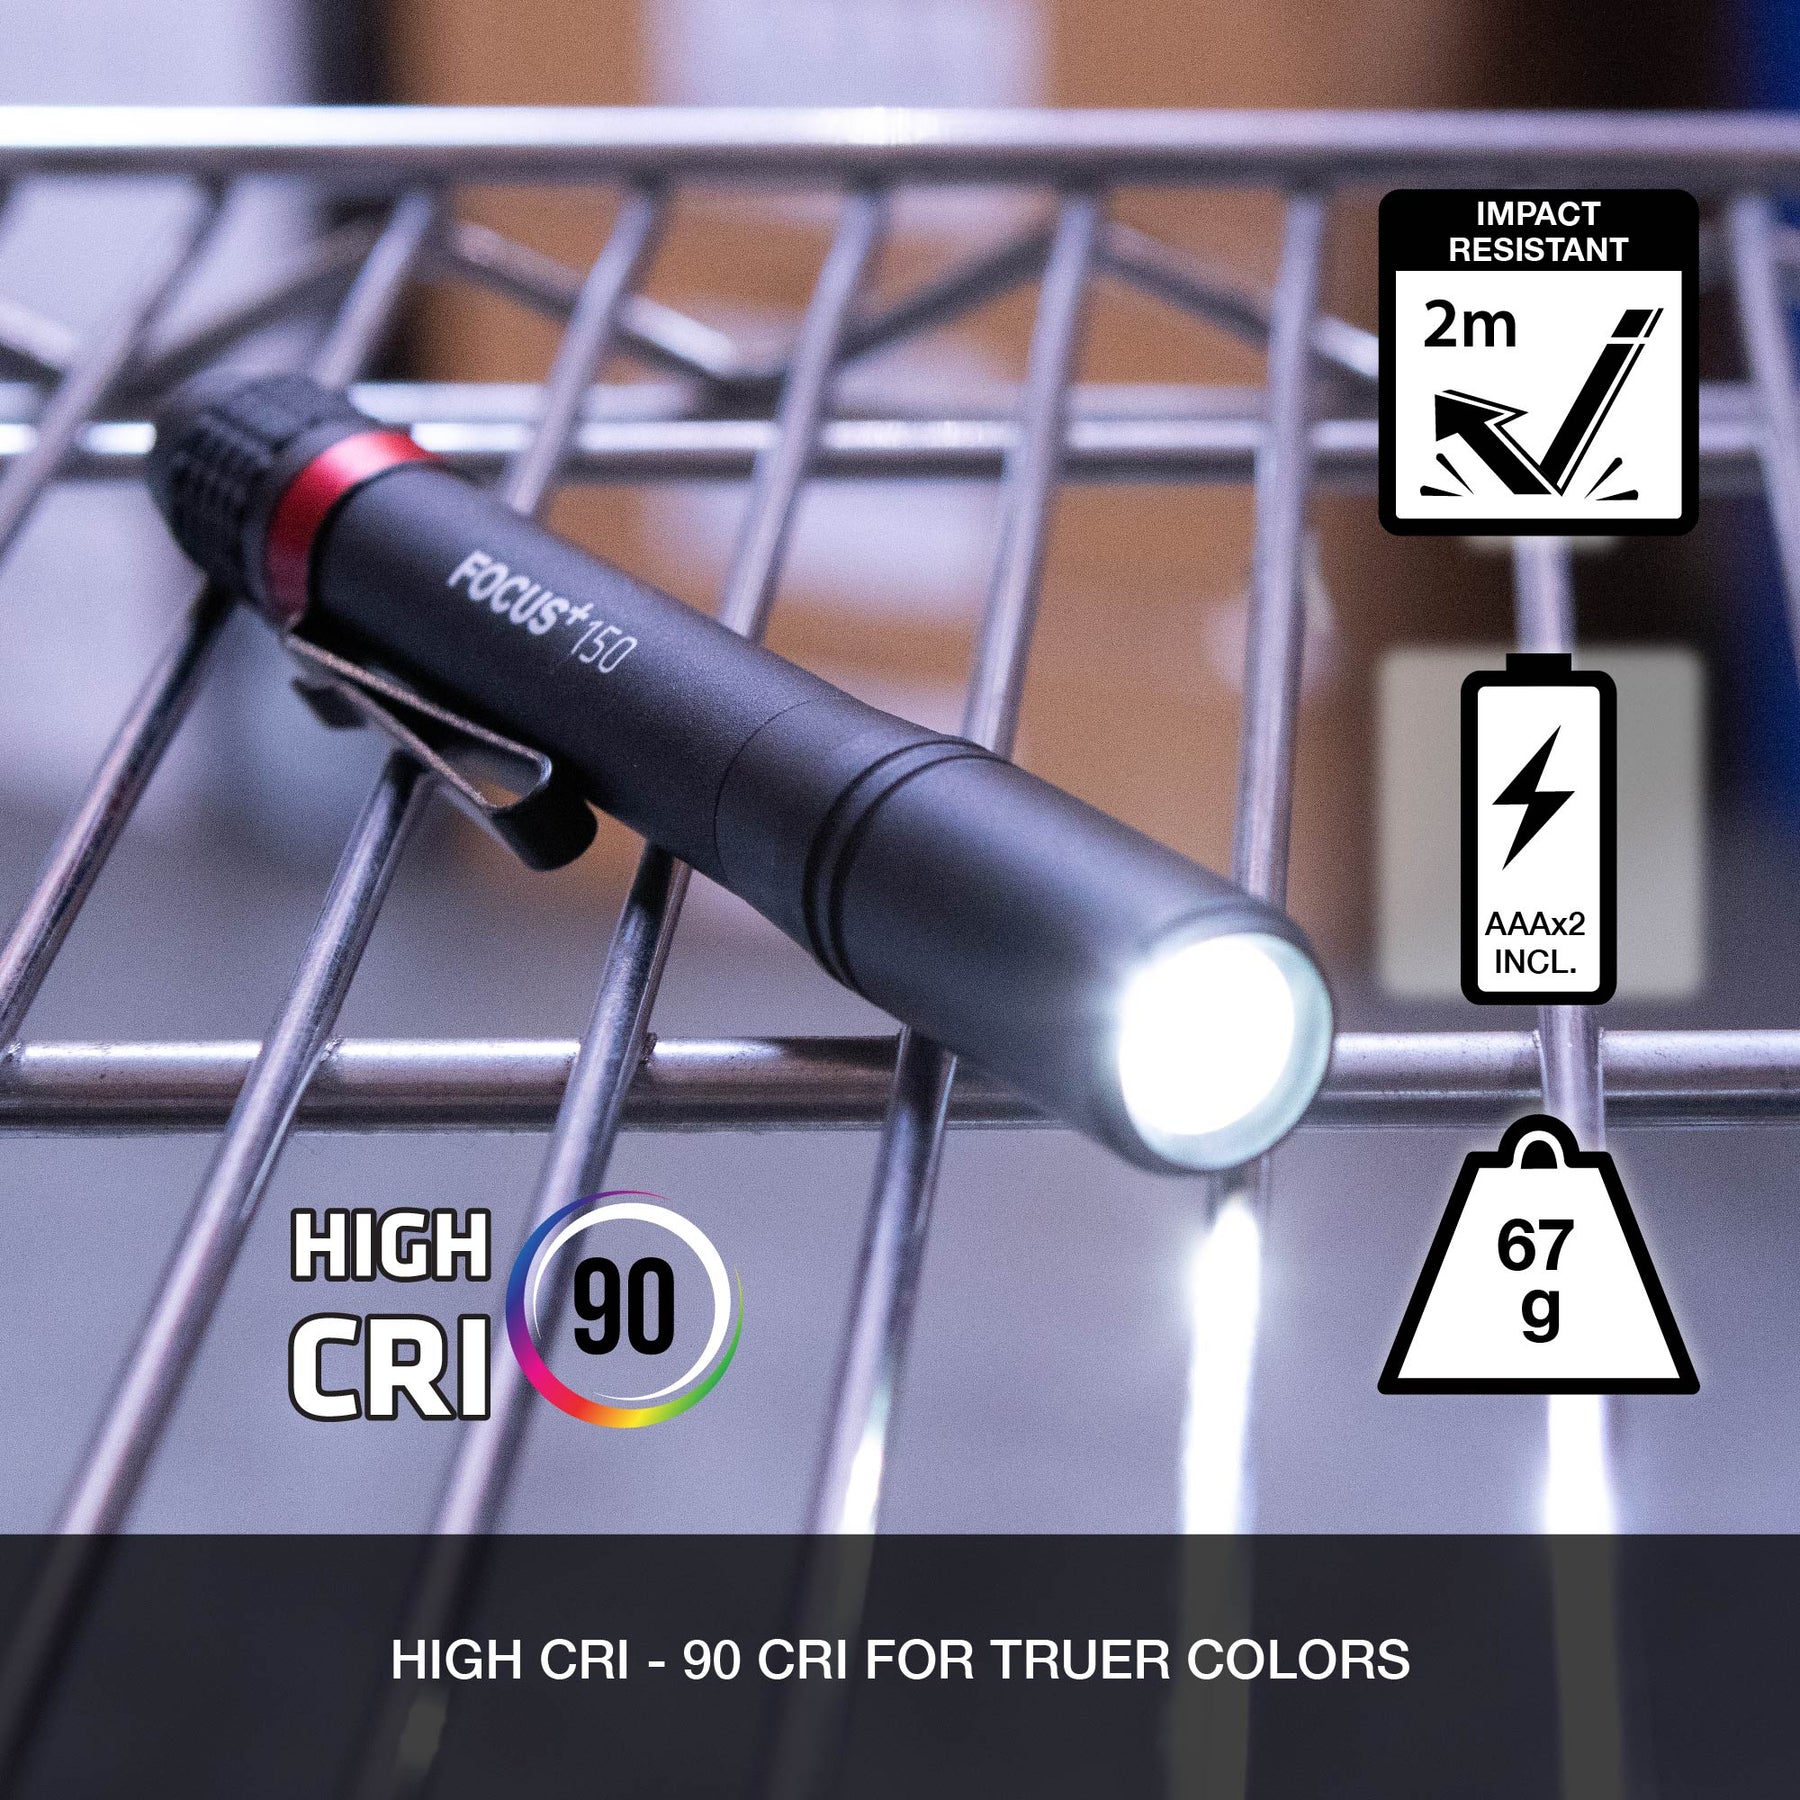 Pivot Pro 320 Multi-purpose Lighting System – NiteRider Technical Lighting